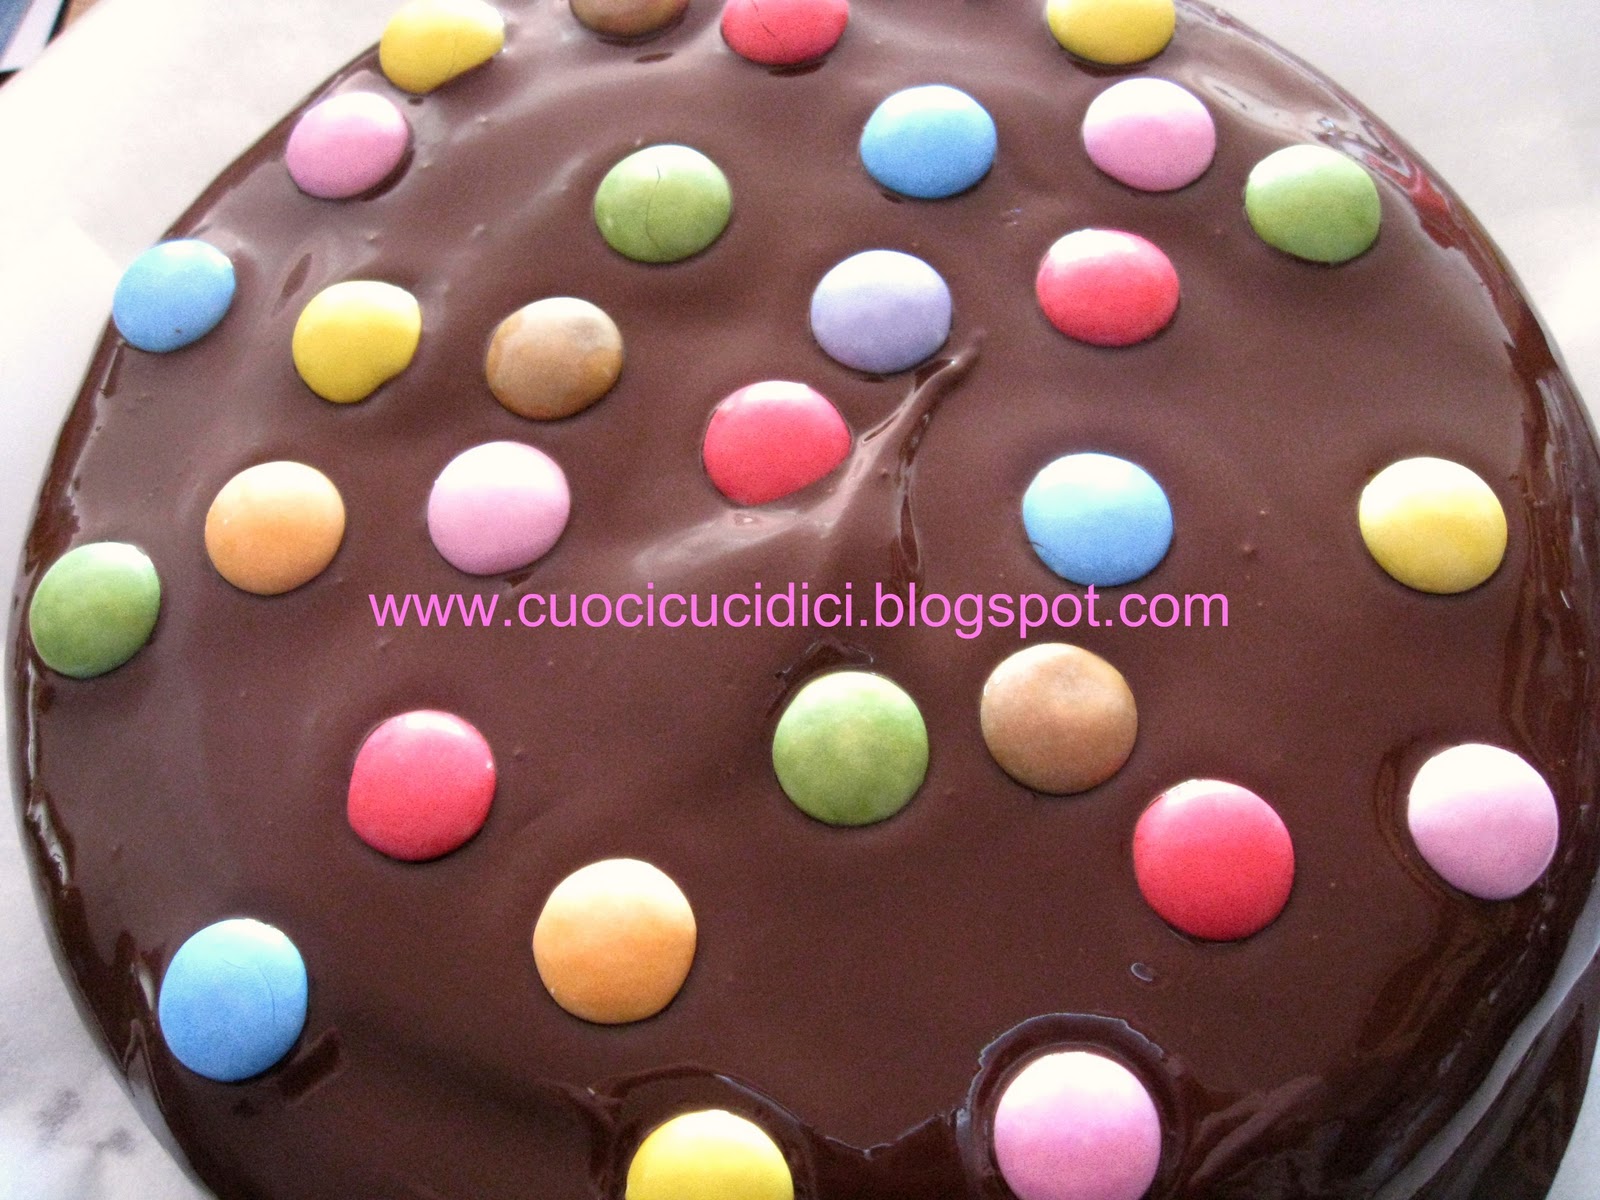 Cuocicucidici Torta Smarties Al Cioccolato Di Alda Muratore Chocolate Smarties Cake By Alda Muratore